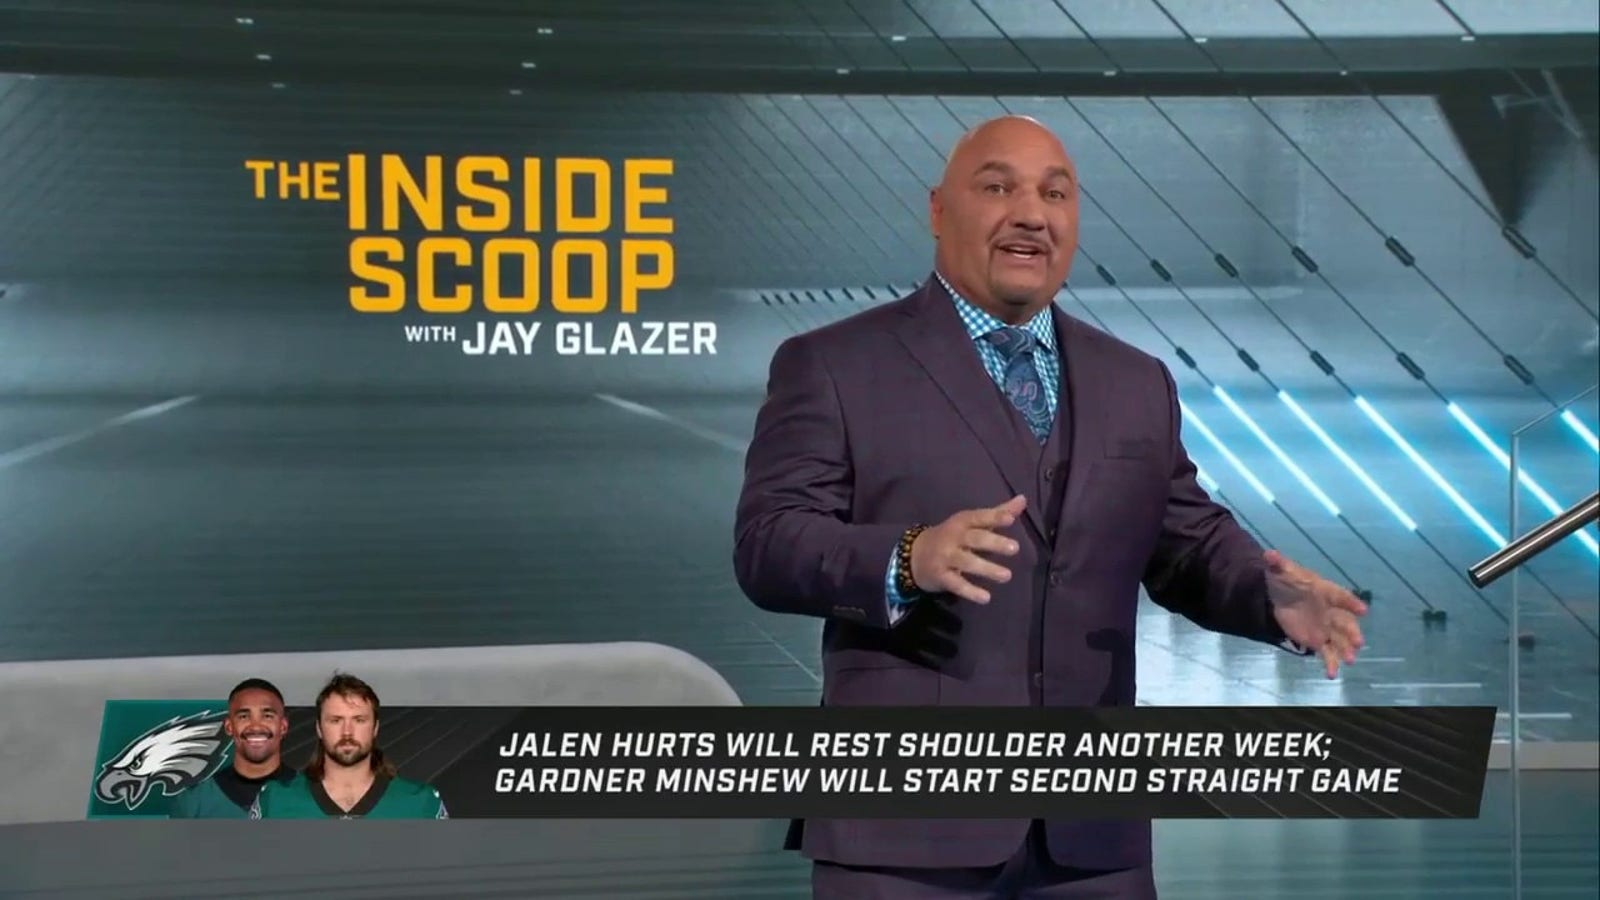 Jay Glazer updates the status of Tua Tagovailoa, Jalen Hurts and Carson Wentz heading into NFL Week 17 